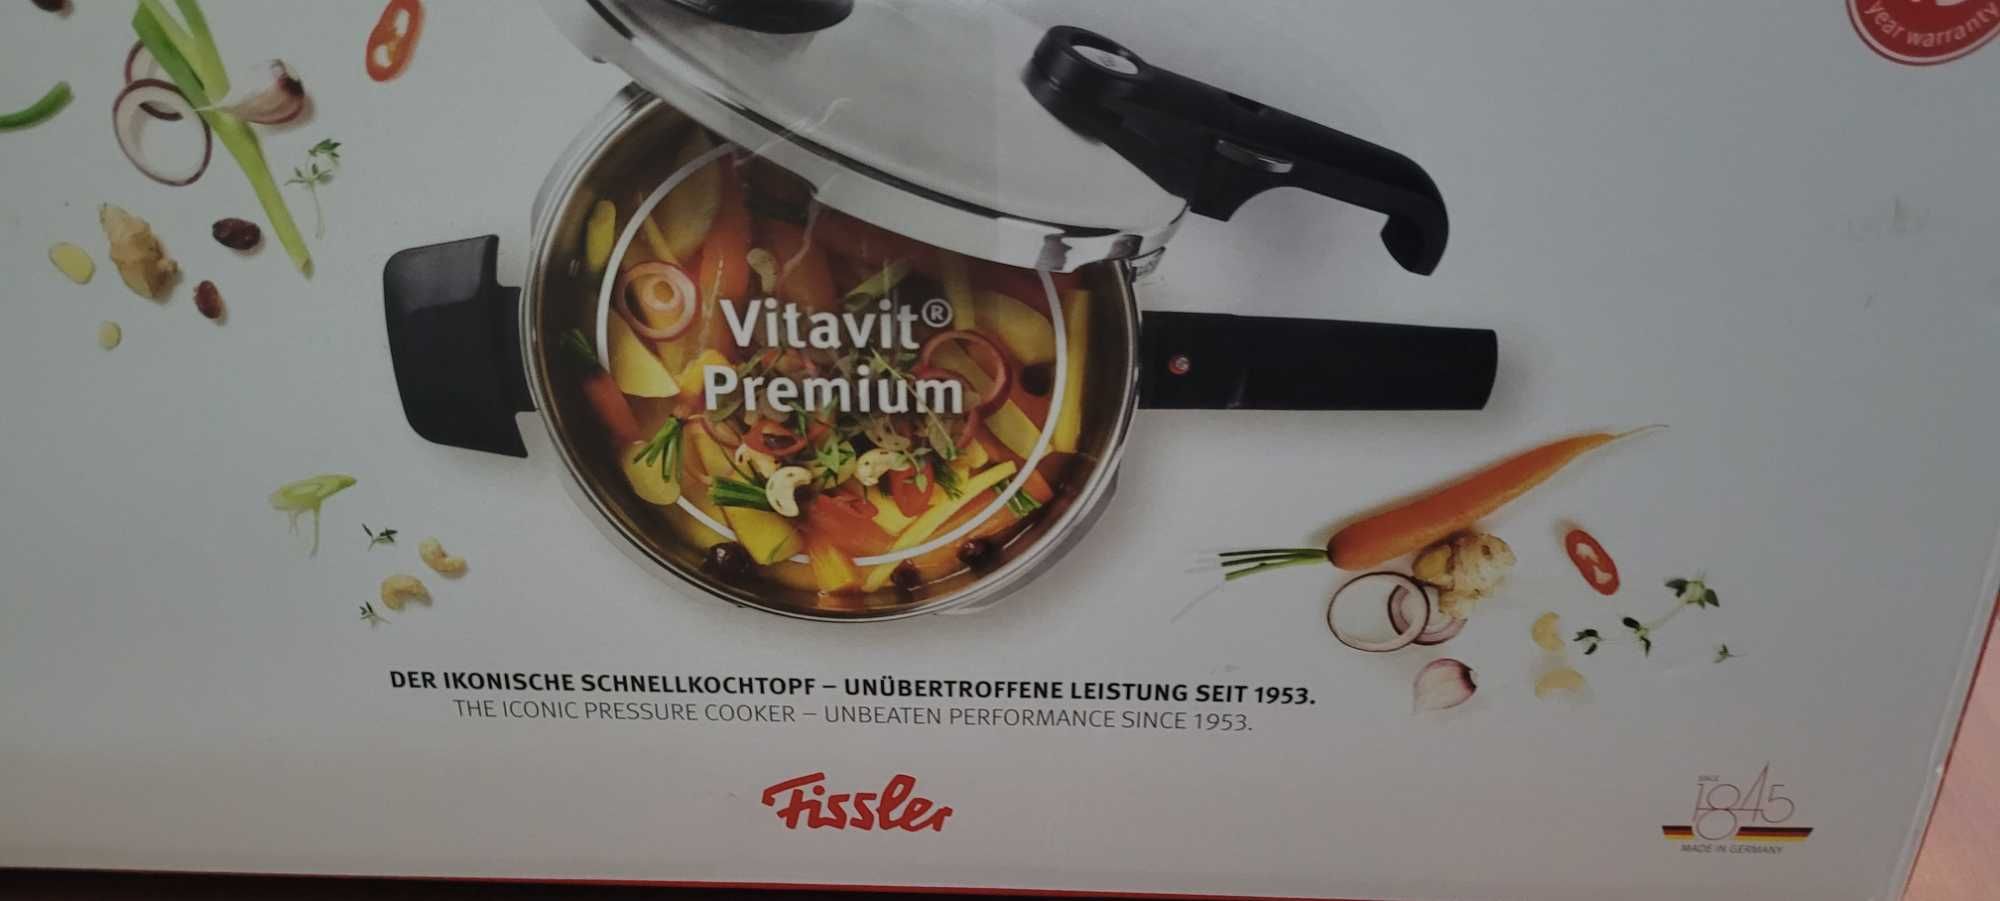 Fissler Vitavit Premium Szybkowar z perforowanym wkladem